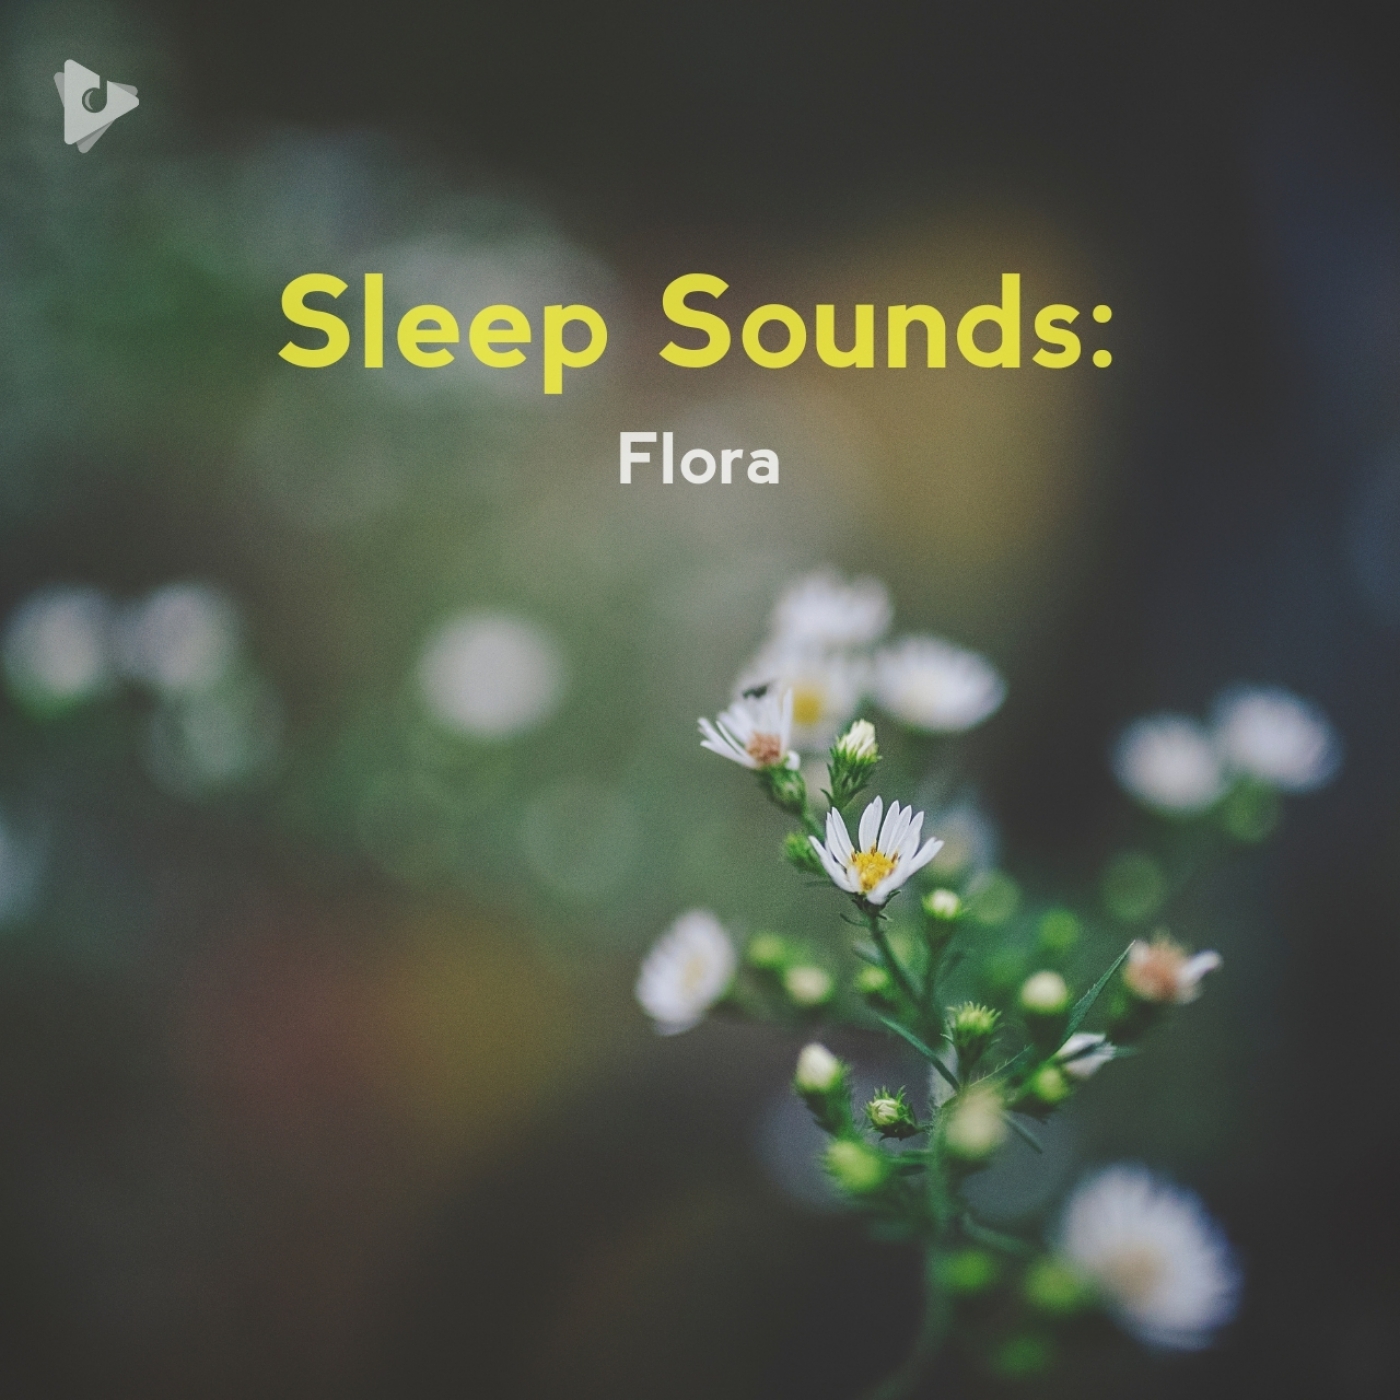 Sleep Sounds: Flora